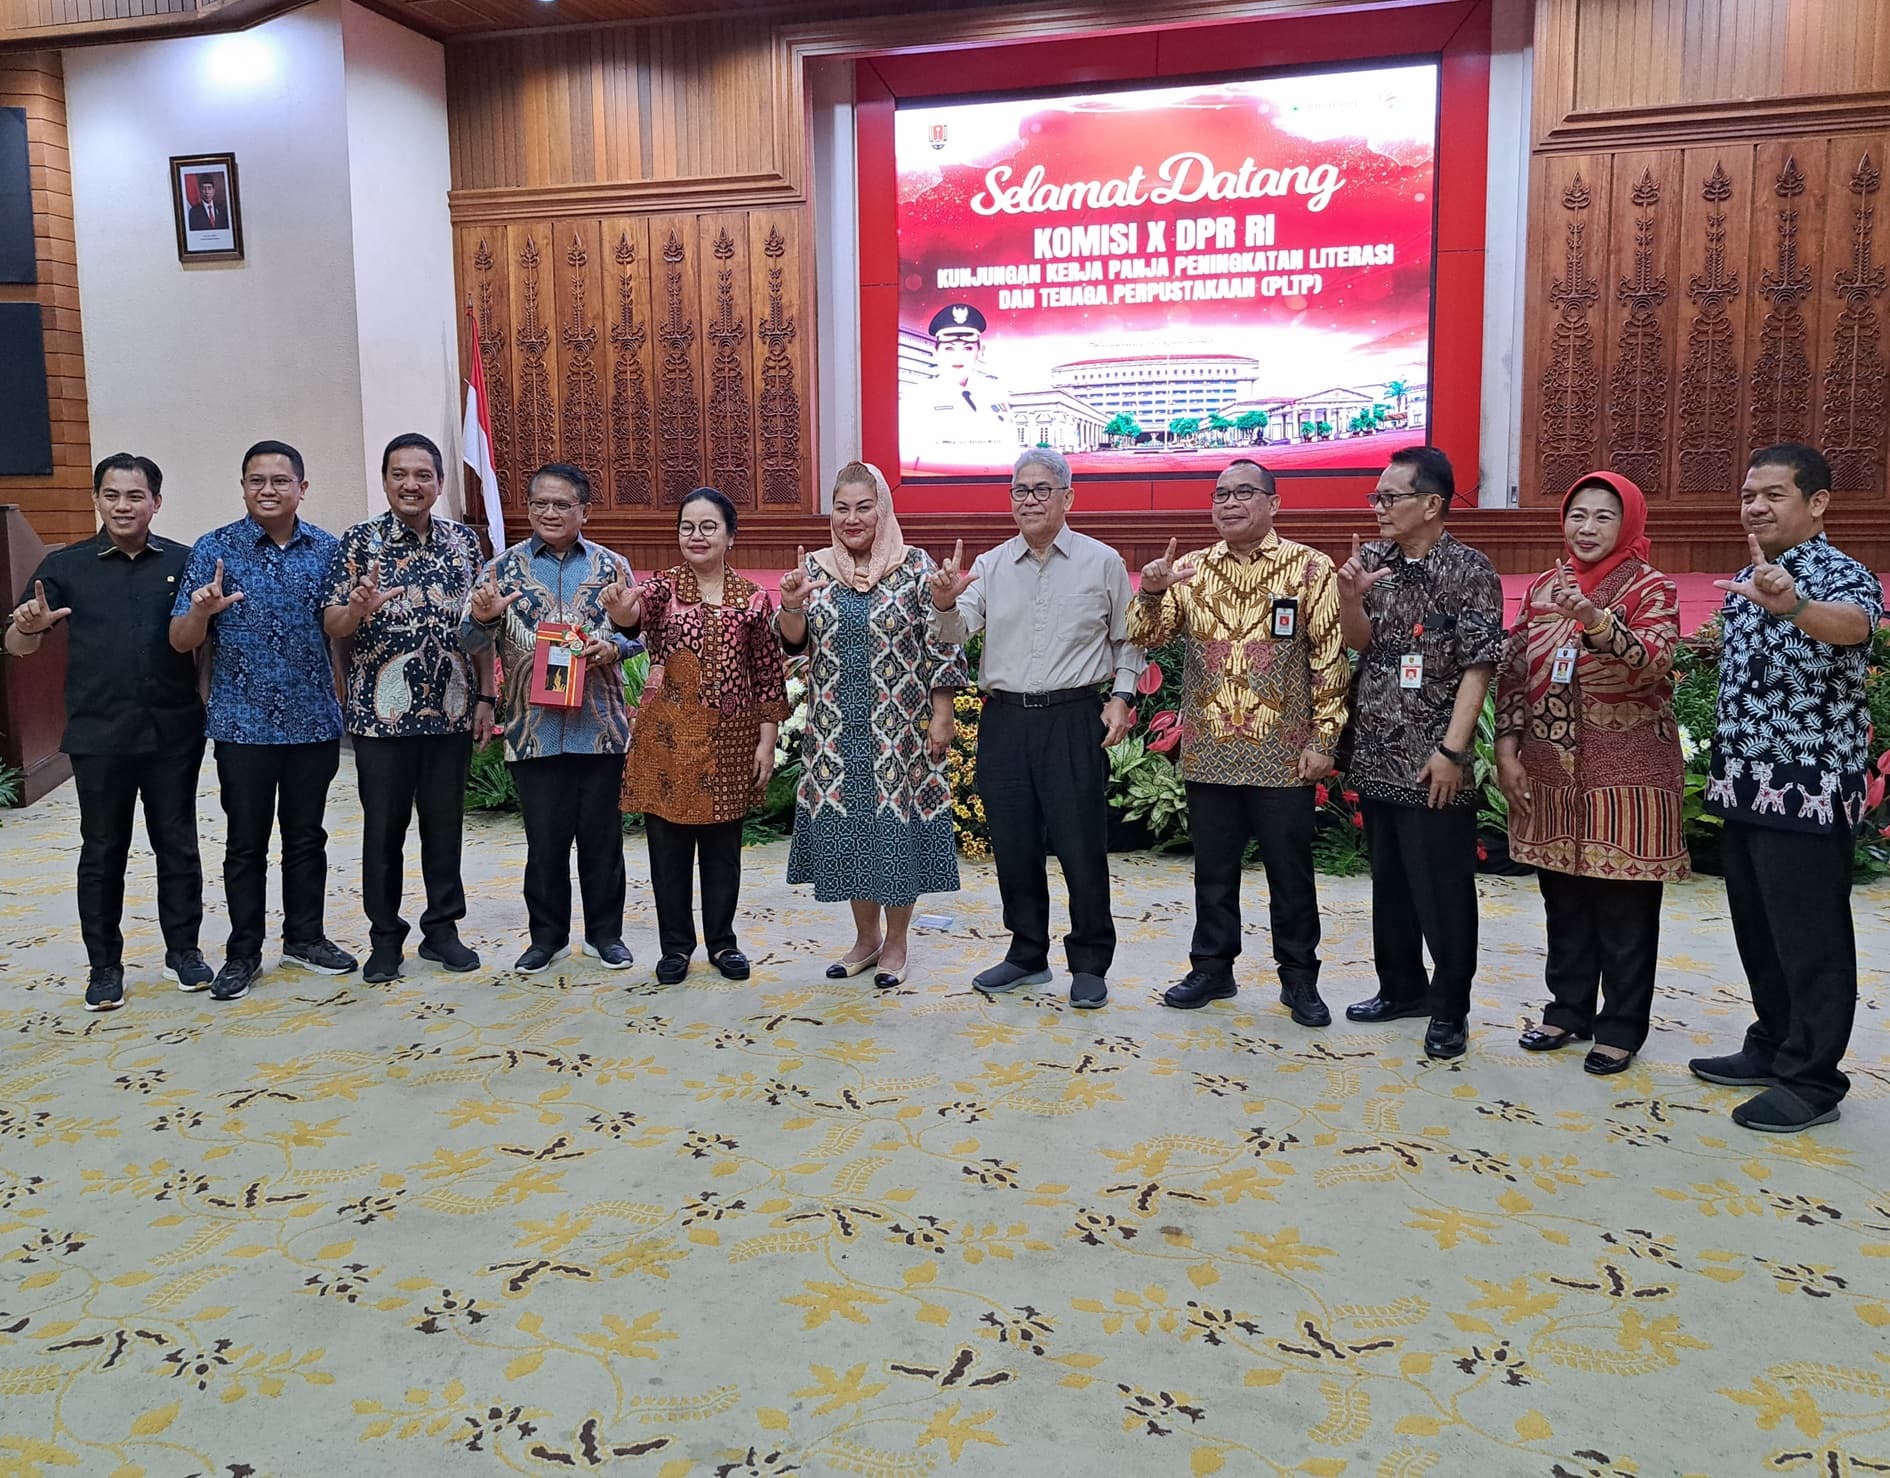 Kunjungan Kerja Panja Peningkatan Literasi dan Tenaga Perpustakaan (PLTP) Komisi X DPR RI di Kota Semarang, Jawa Tengah